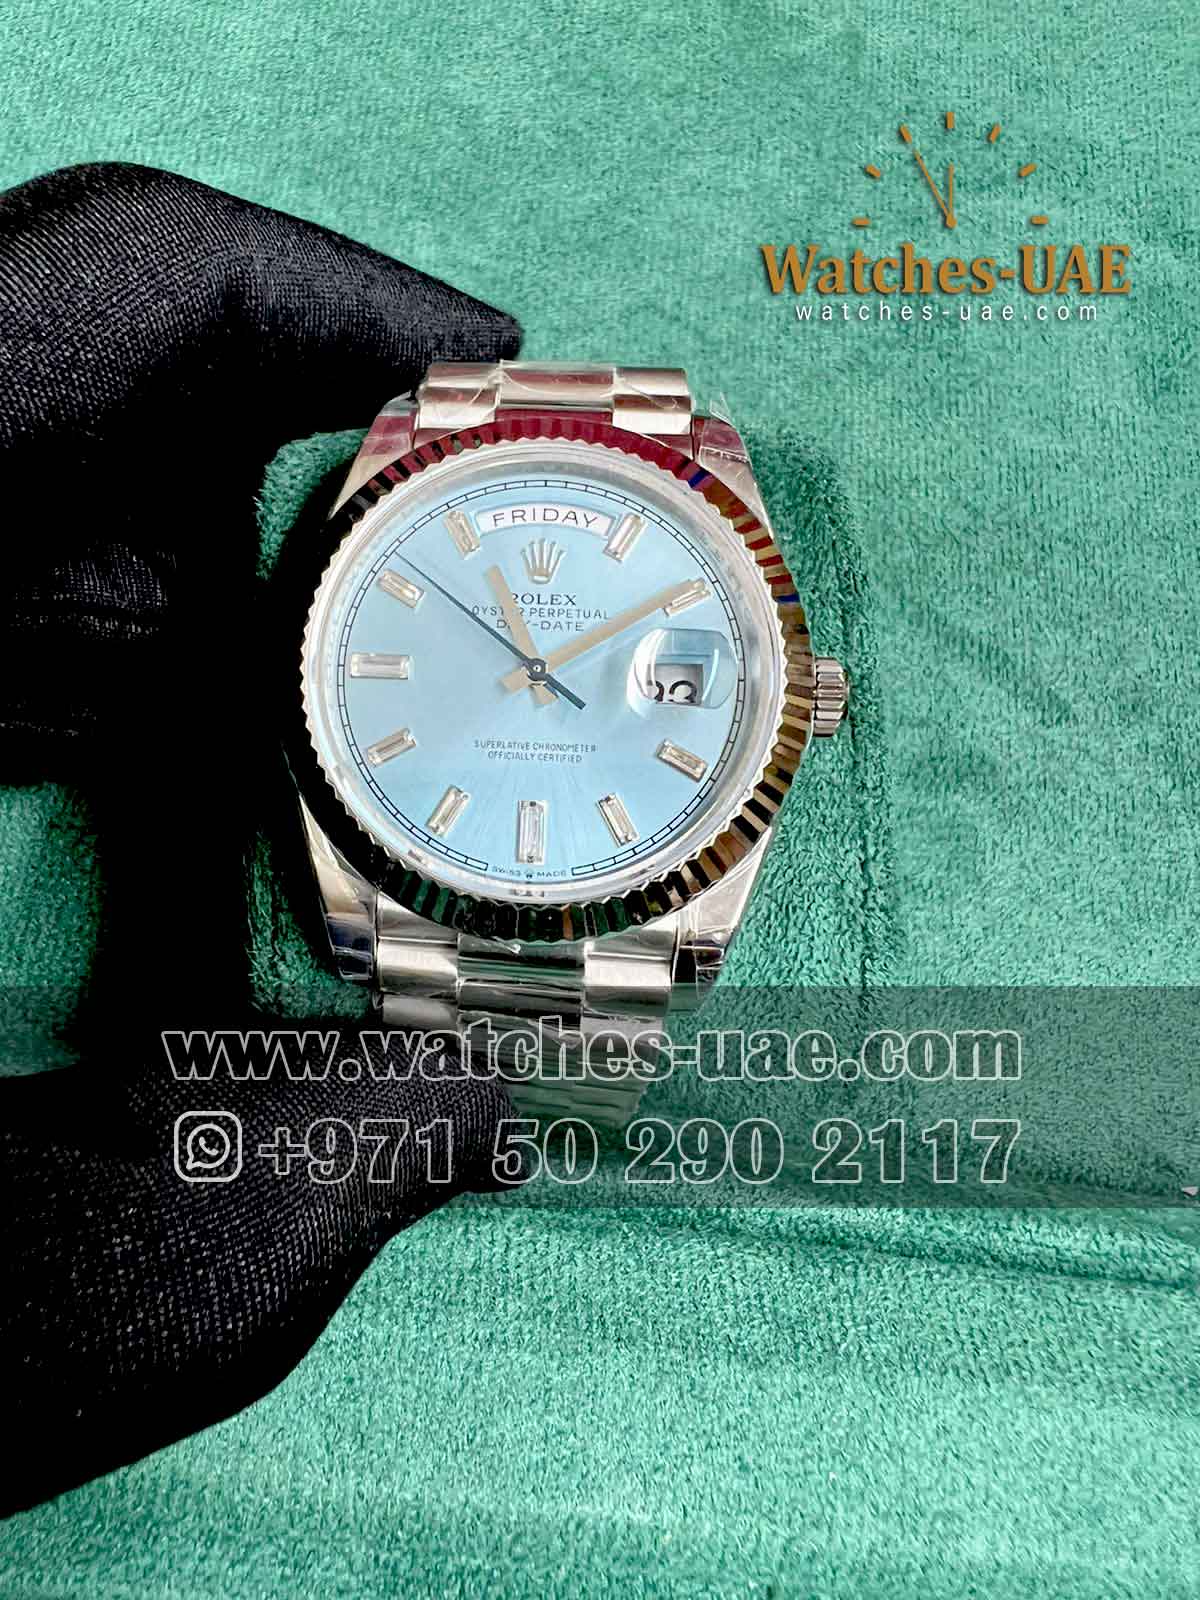 Rolex Day Date Blue 40 mm - Watches UAE